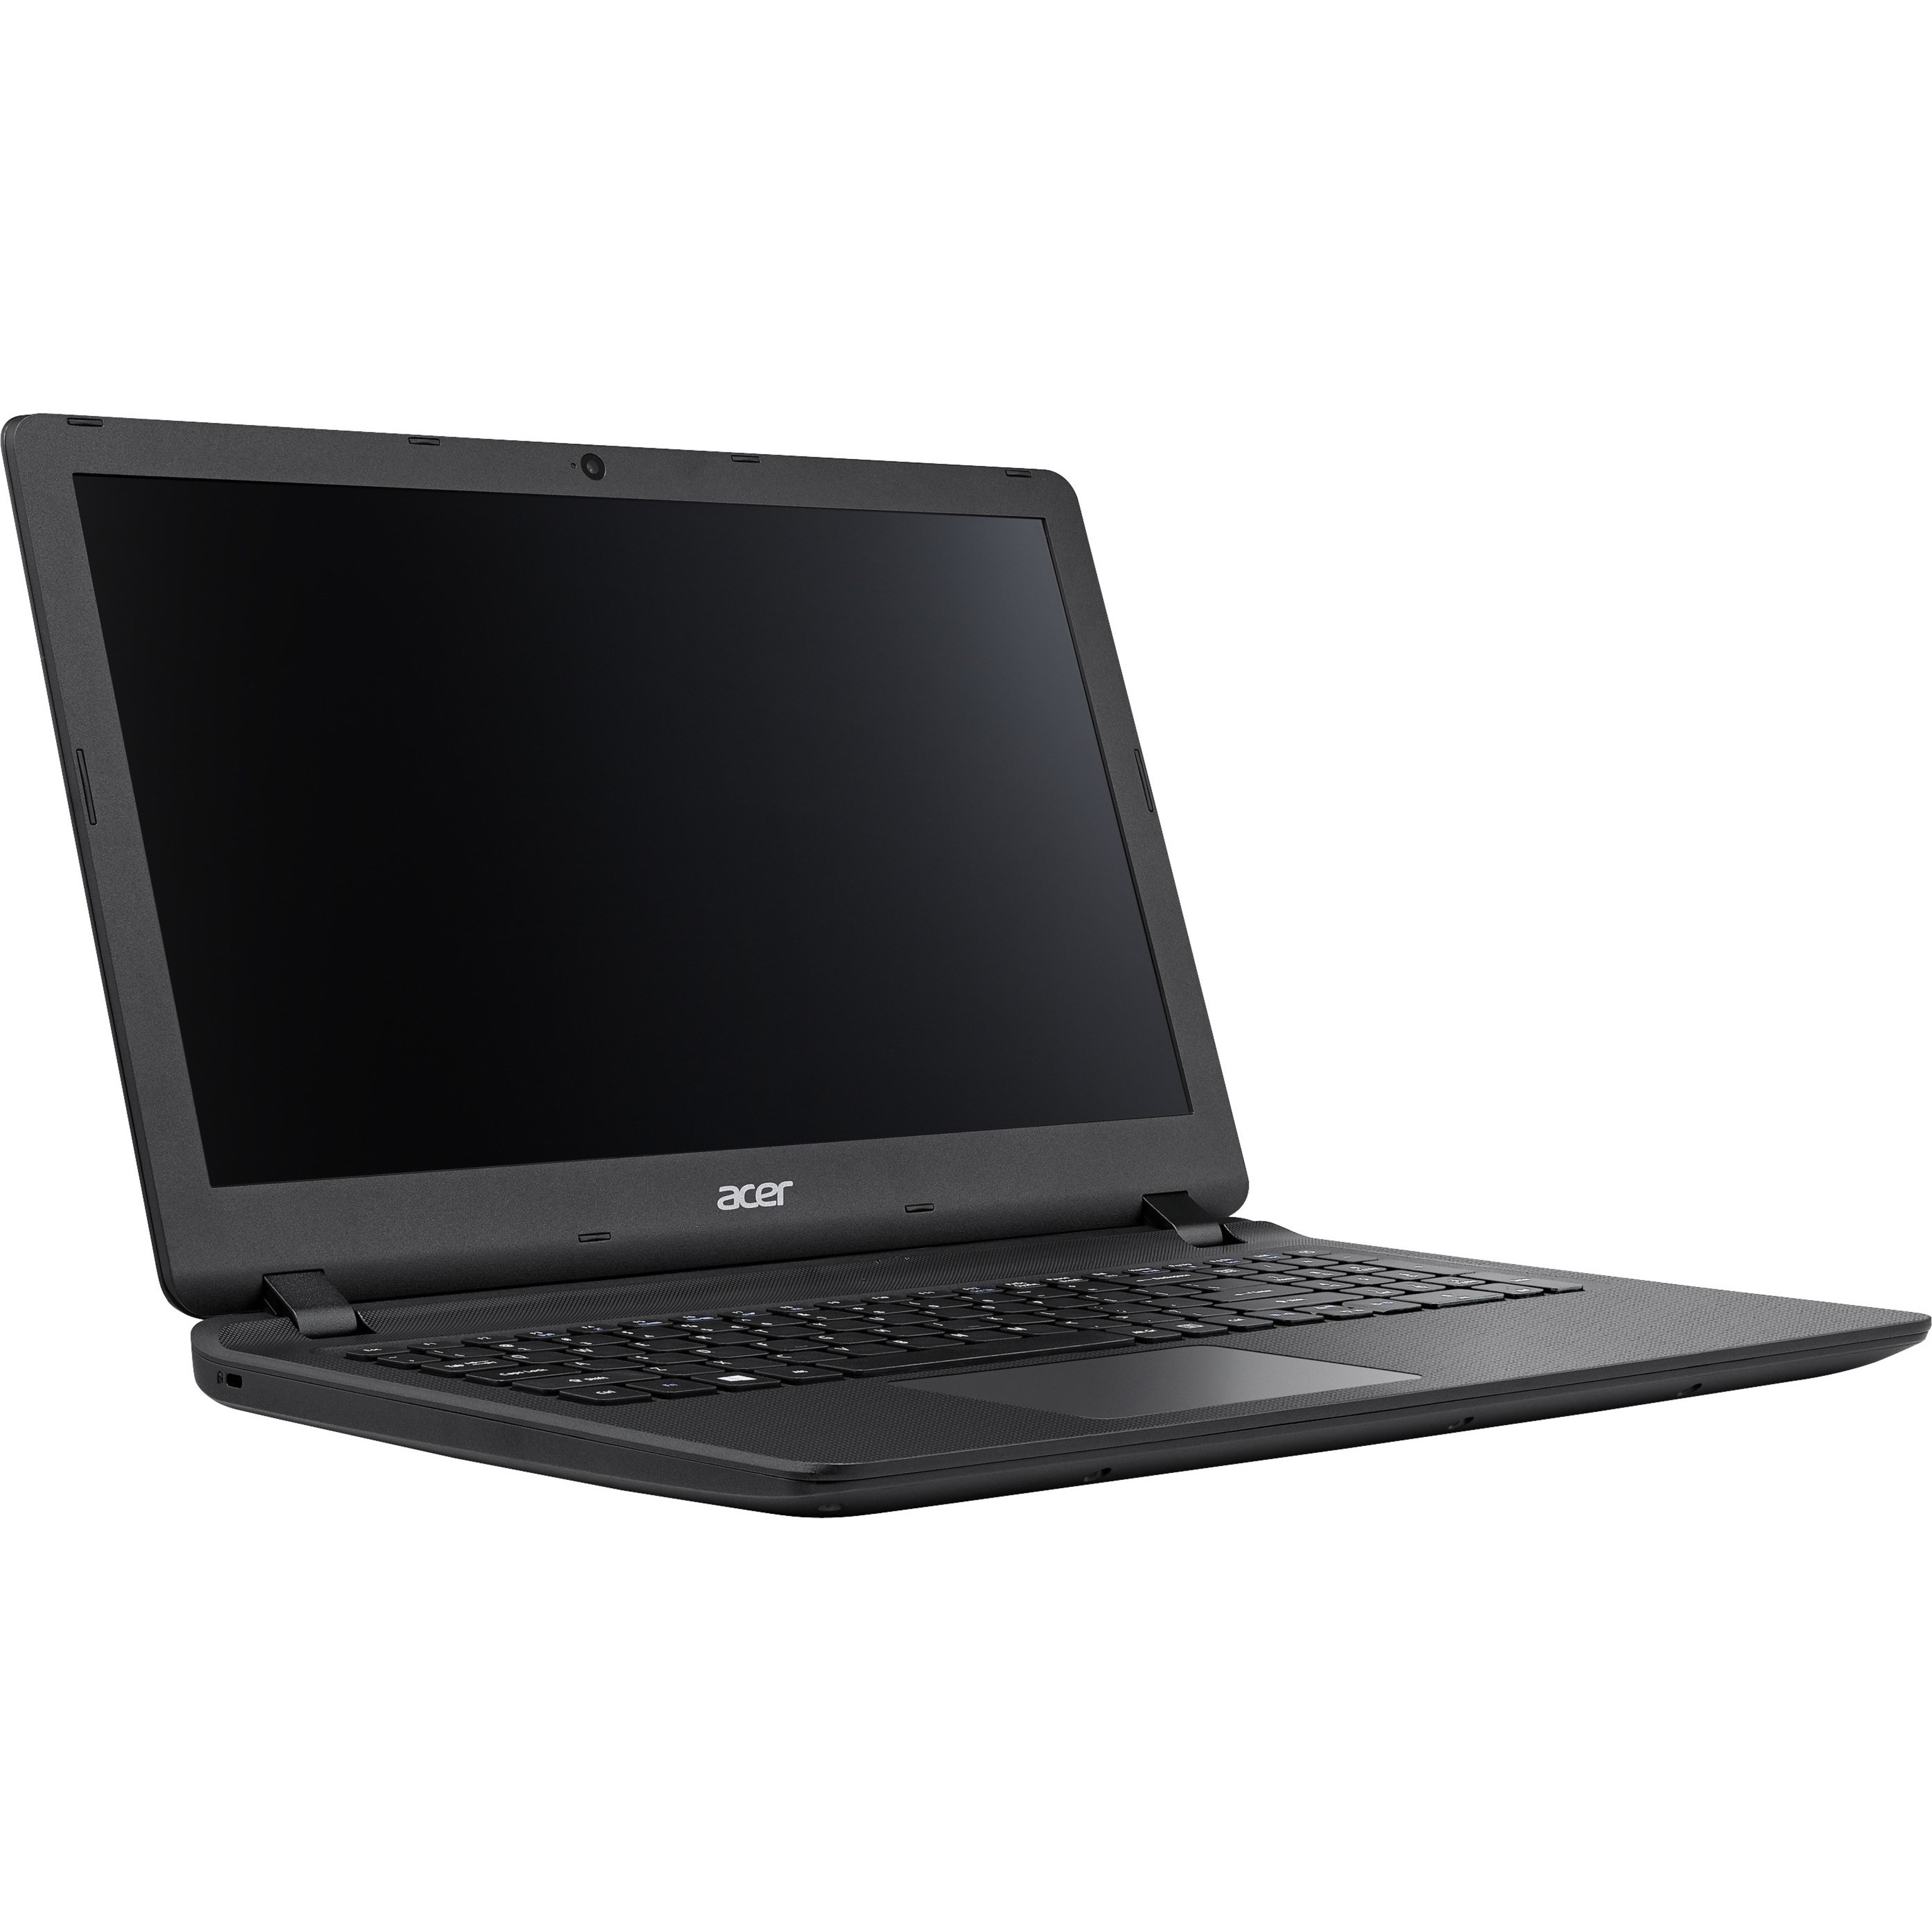 Acer Aspire 15.6" Laptop, Intel Celeron N3350, 500GB HD, DVD Writer, Windows 10 Home, ES1-533-C3VD - image 5 of 7